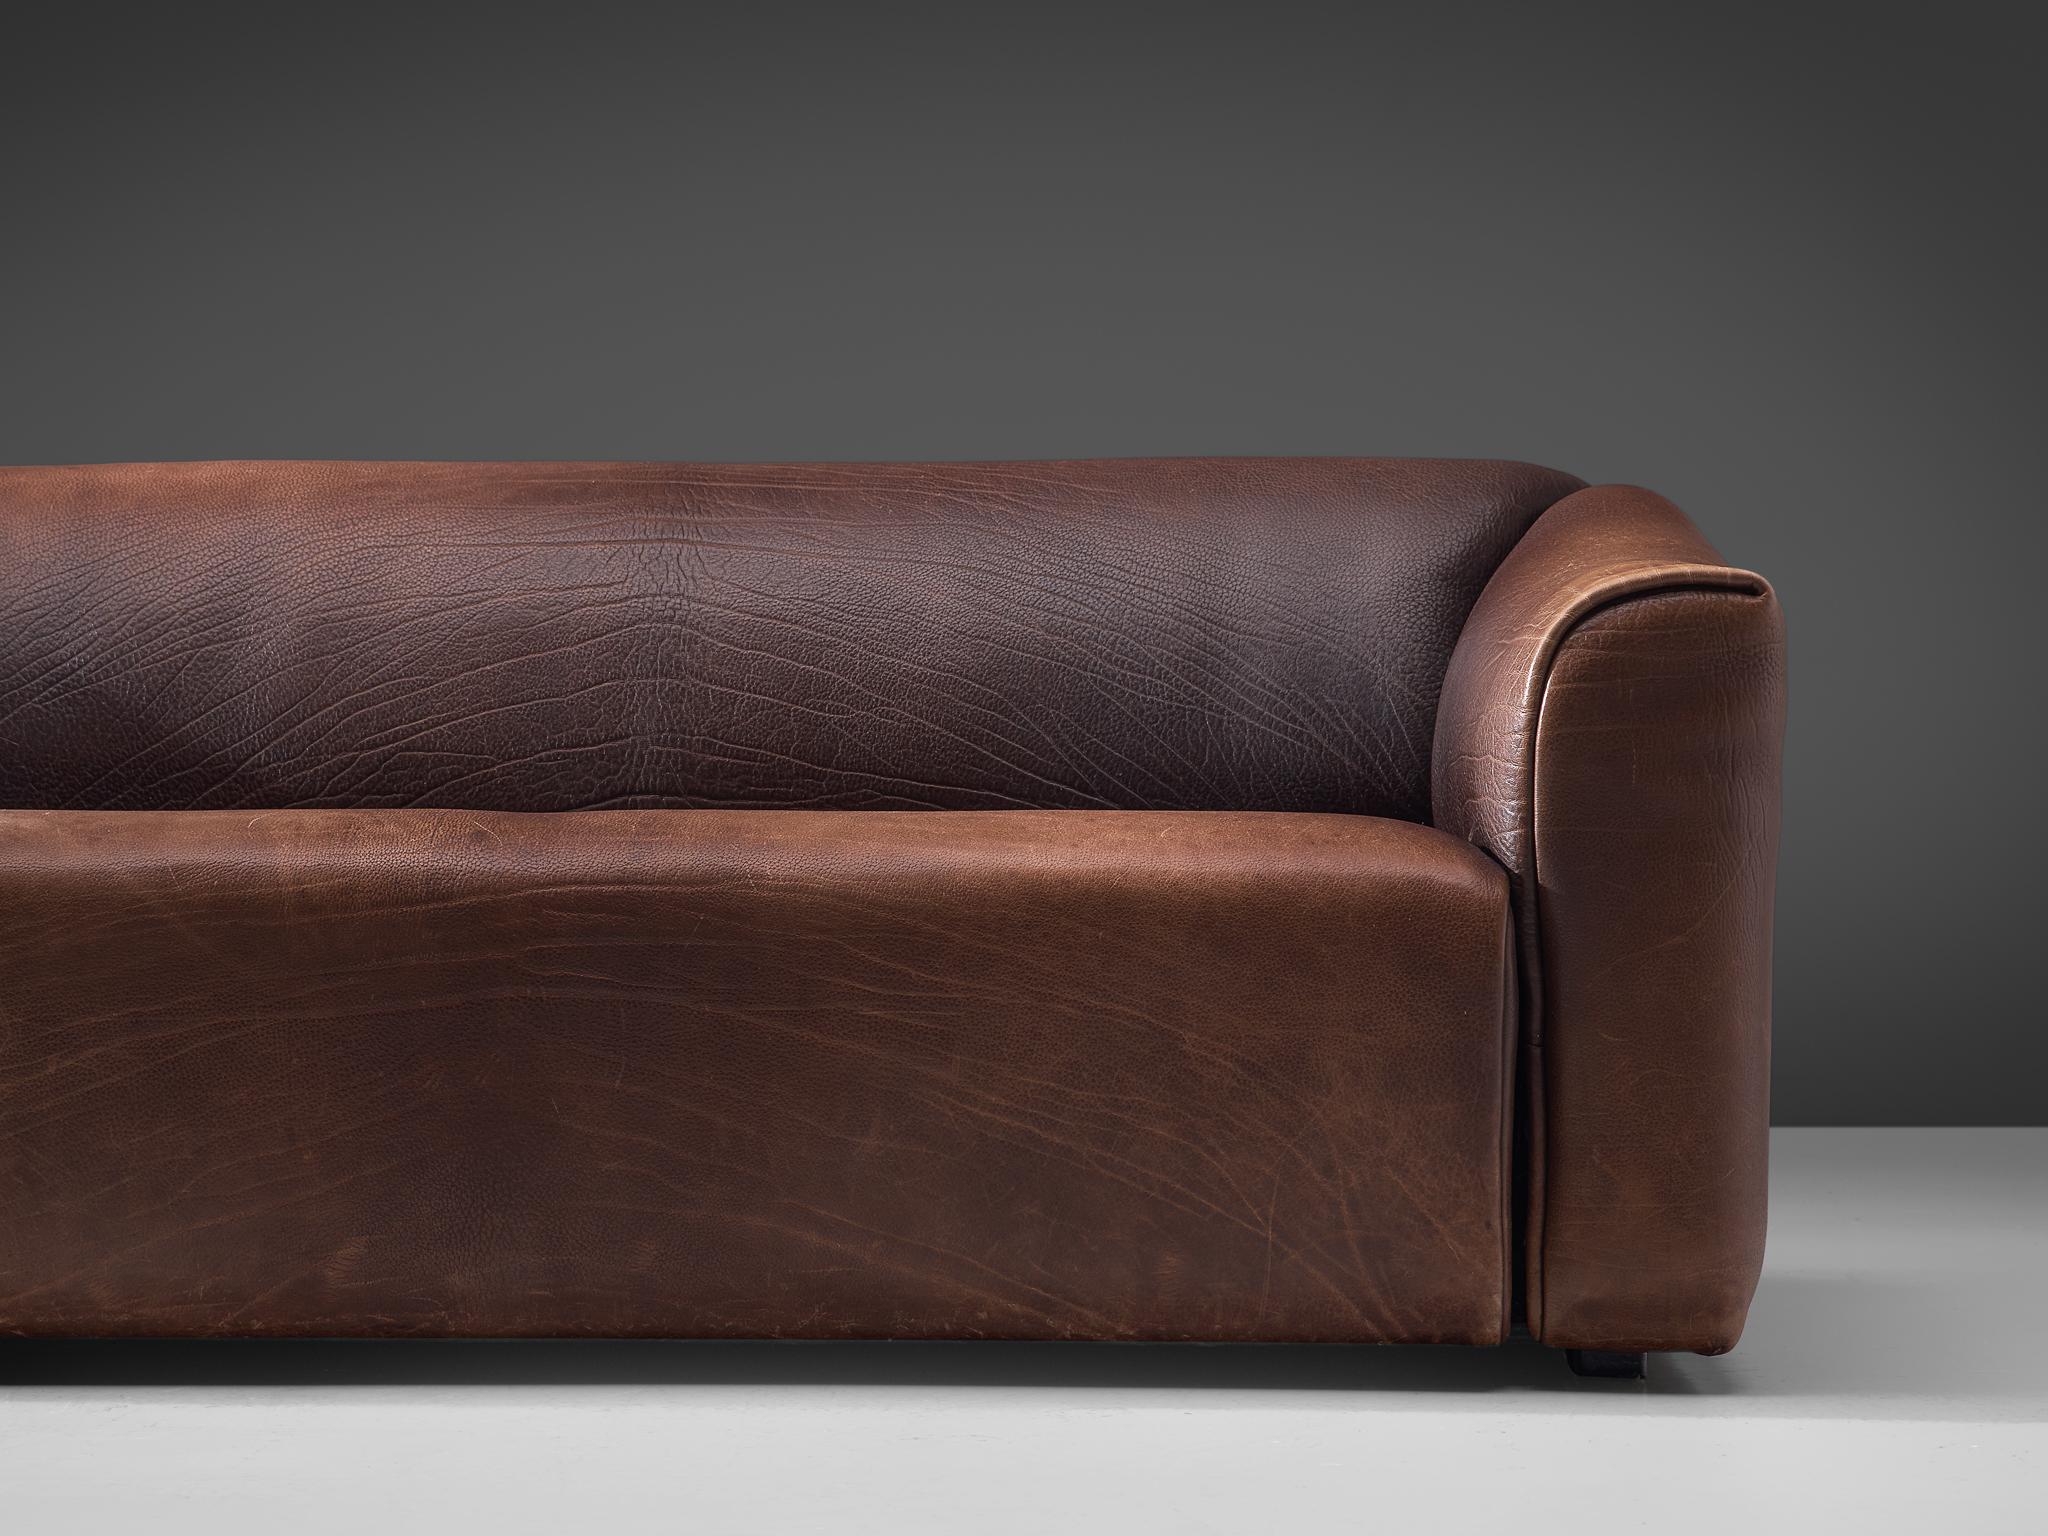 Swiss De Sede DS-47 Sofa in Dark Brown Buffalo Leather